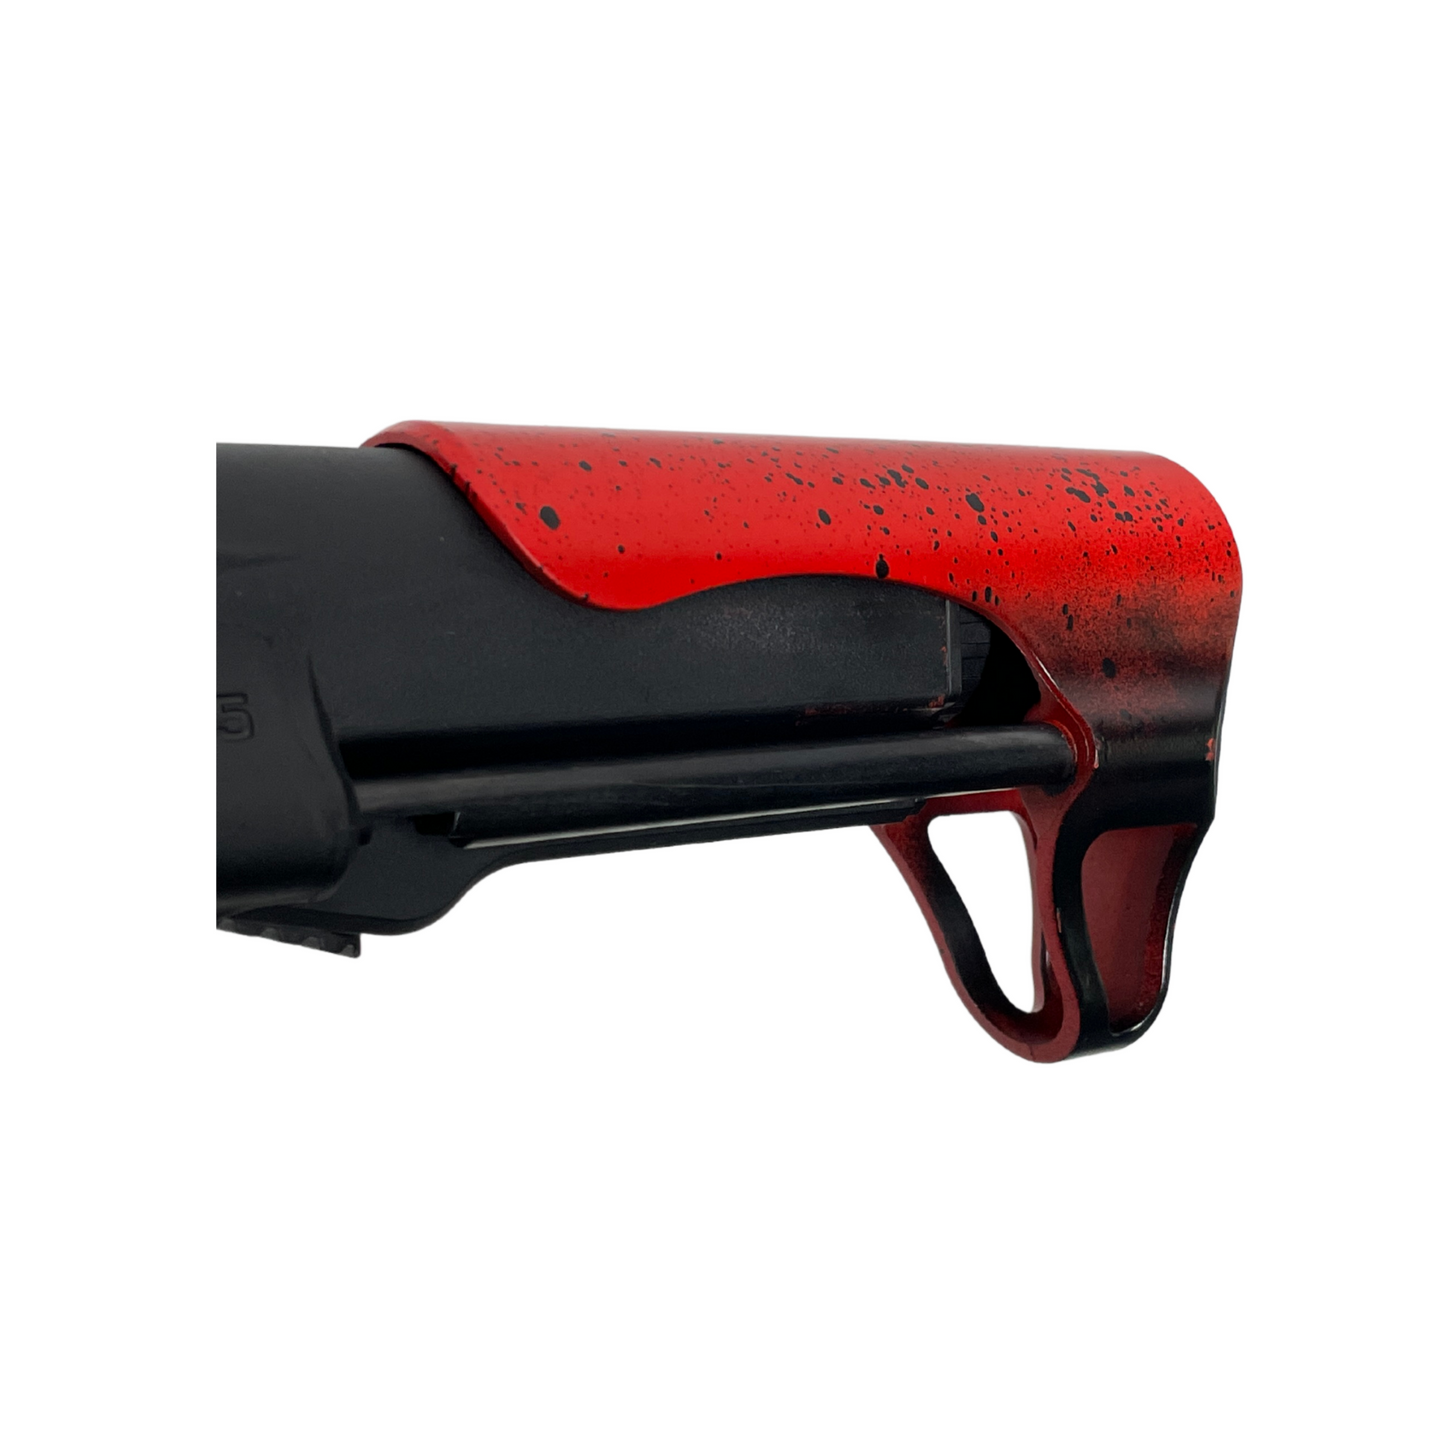 "Trippier Red" ARP9 GBU Custom - Gel Blaster